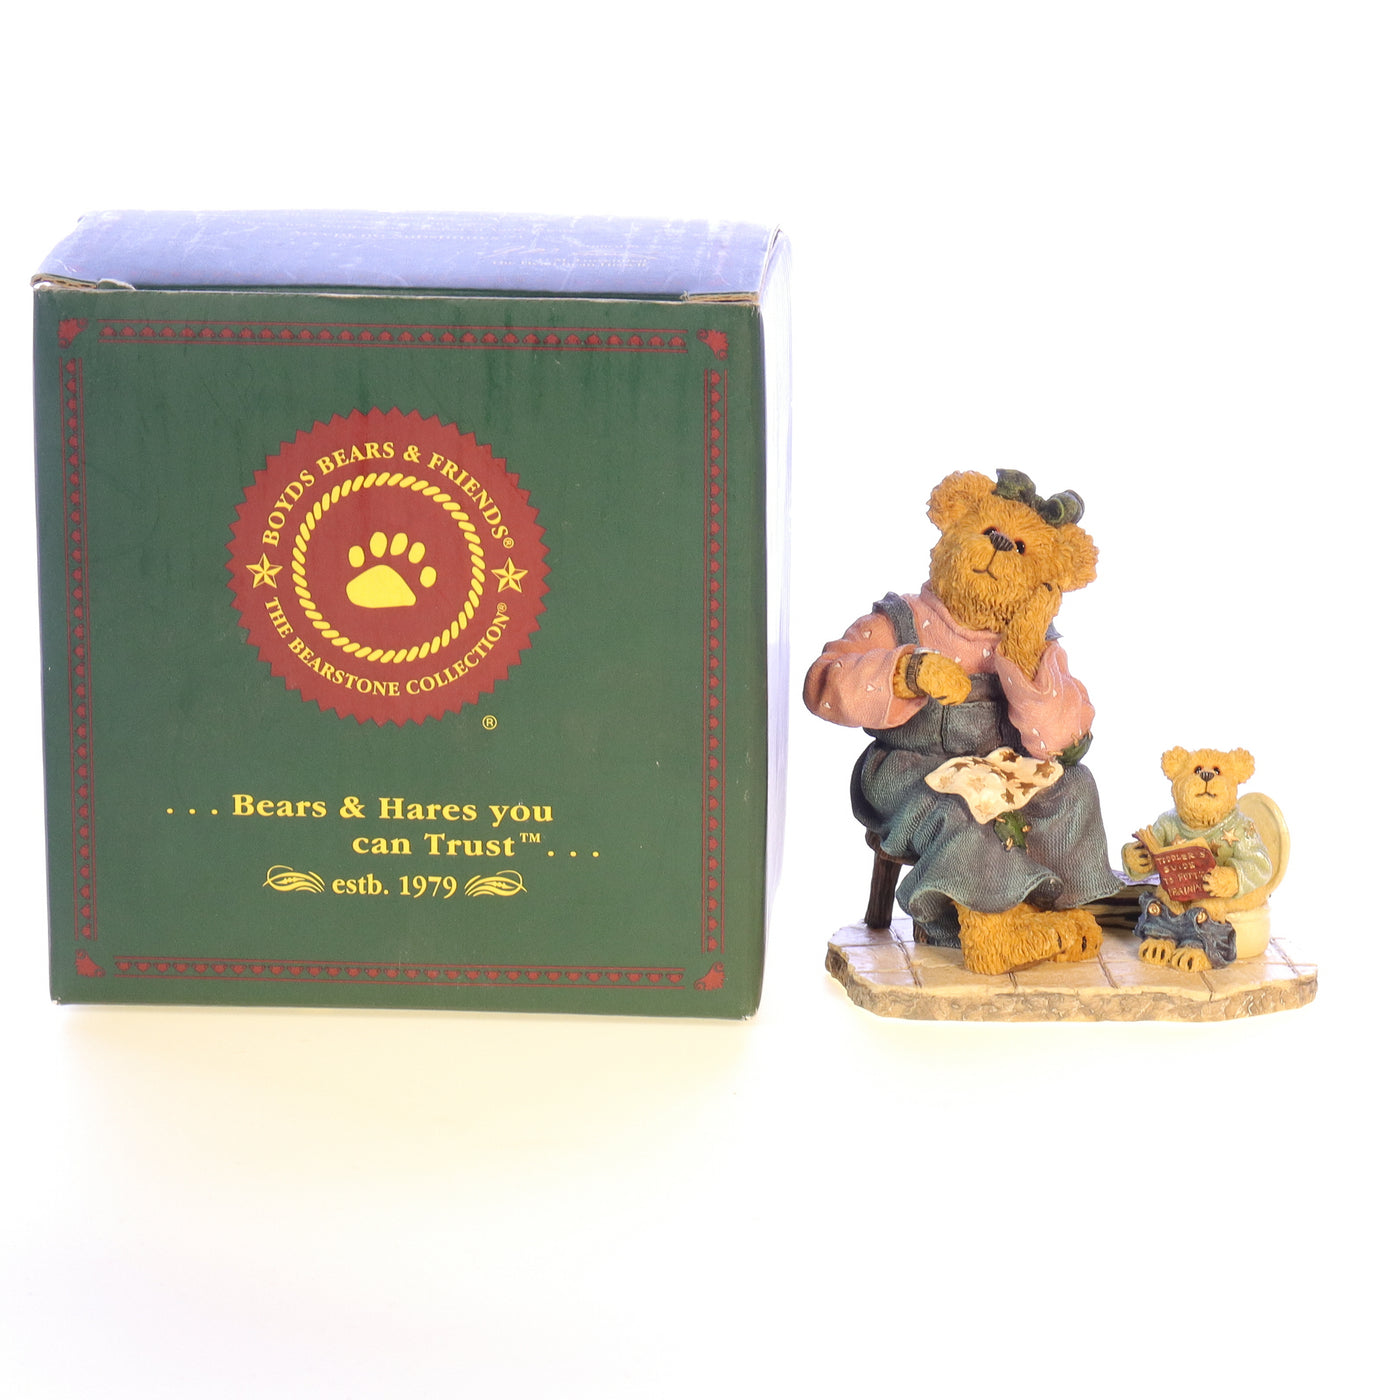 Boyds Bears Resin Figurine in Box 227797 2002 3.25"